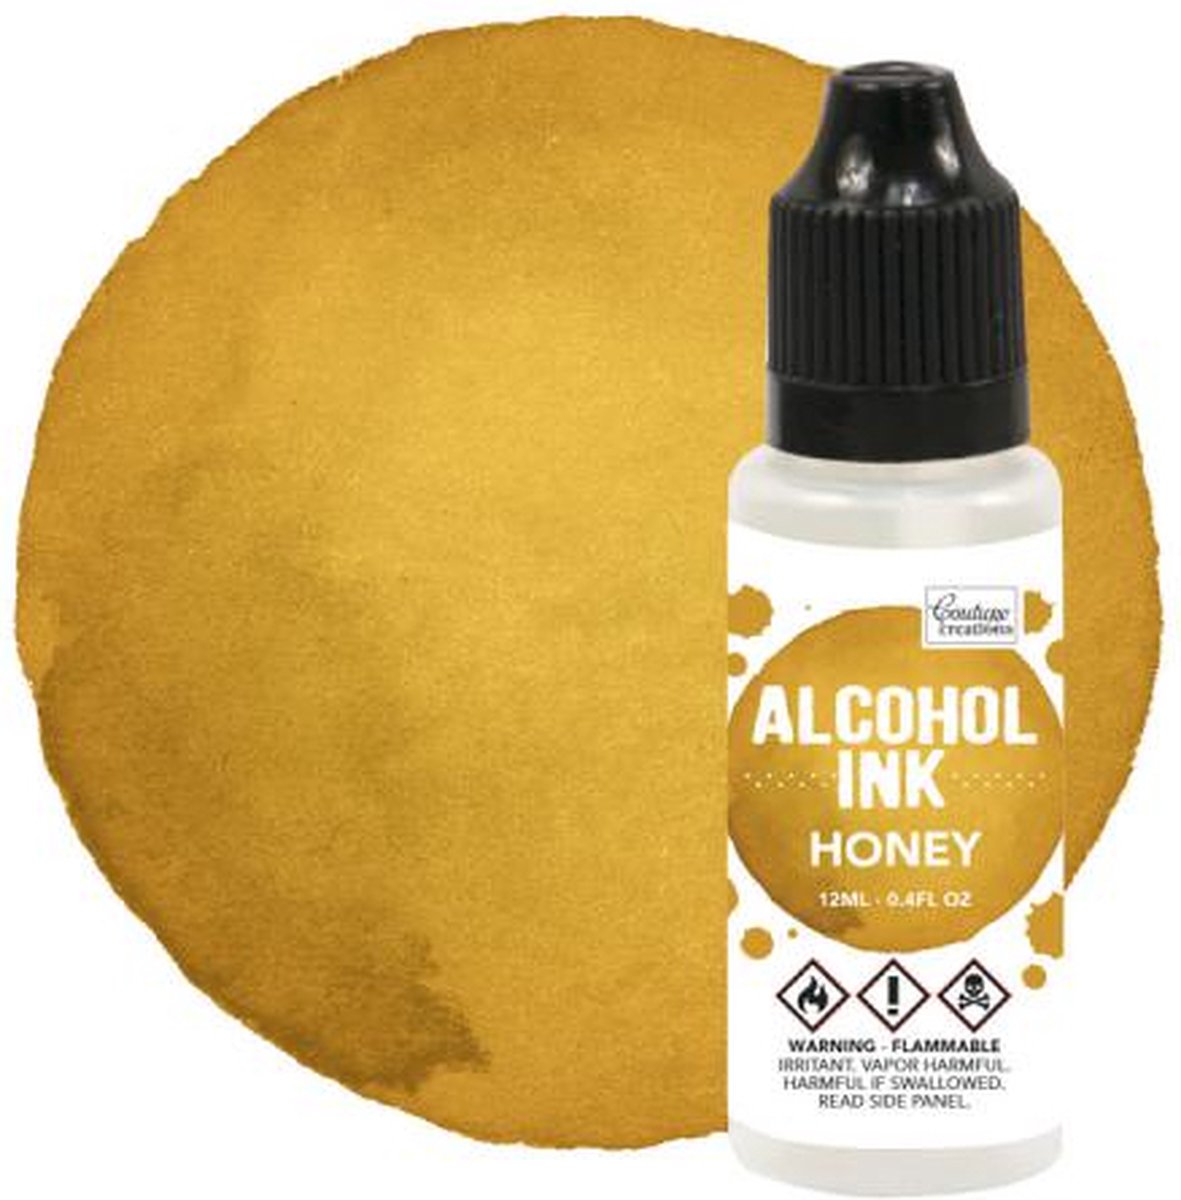 Alcohol Ink Butterscotch / Honey (12mL | 0.4fl oz)